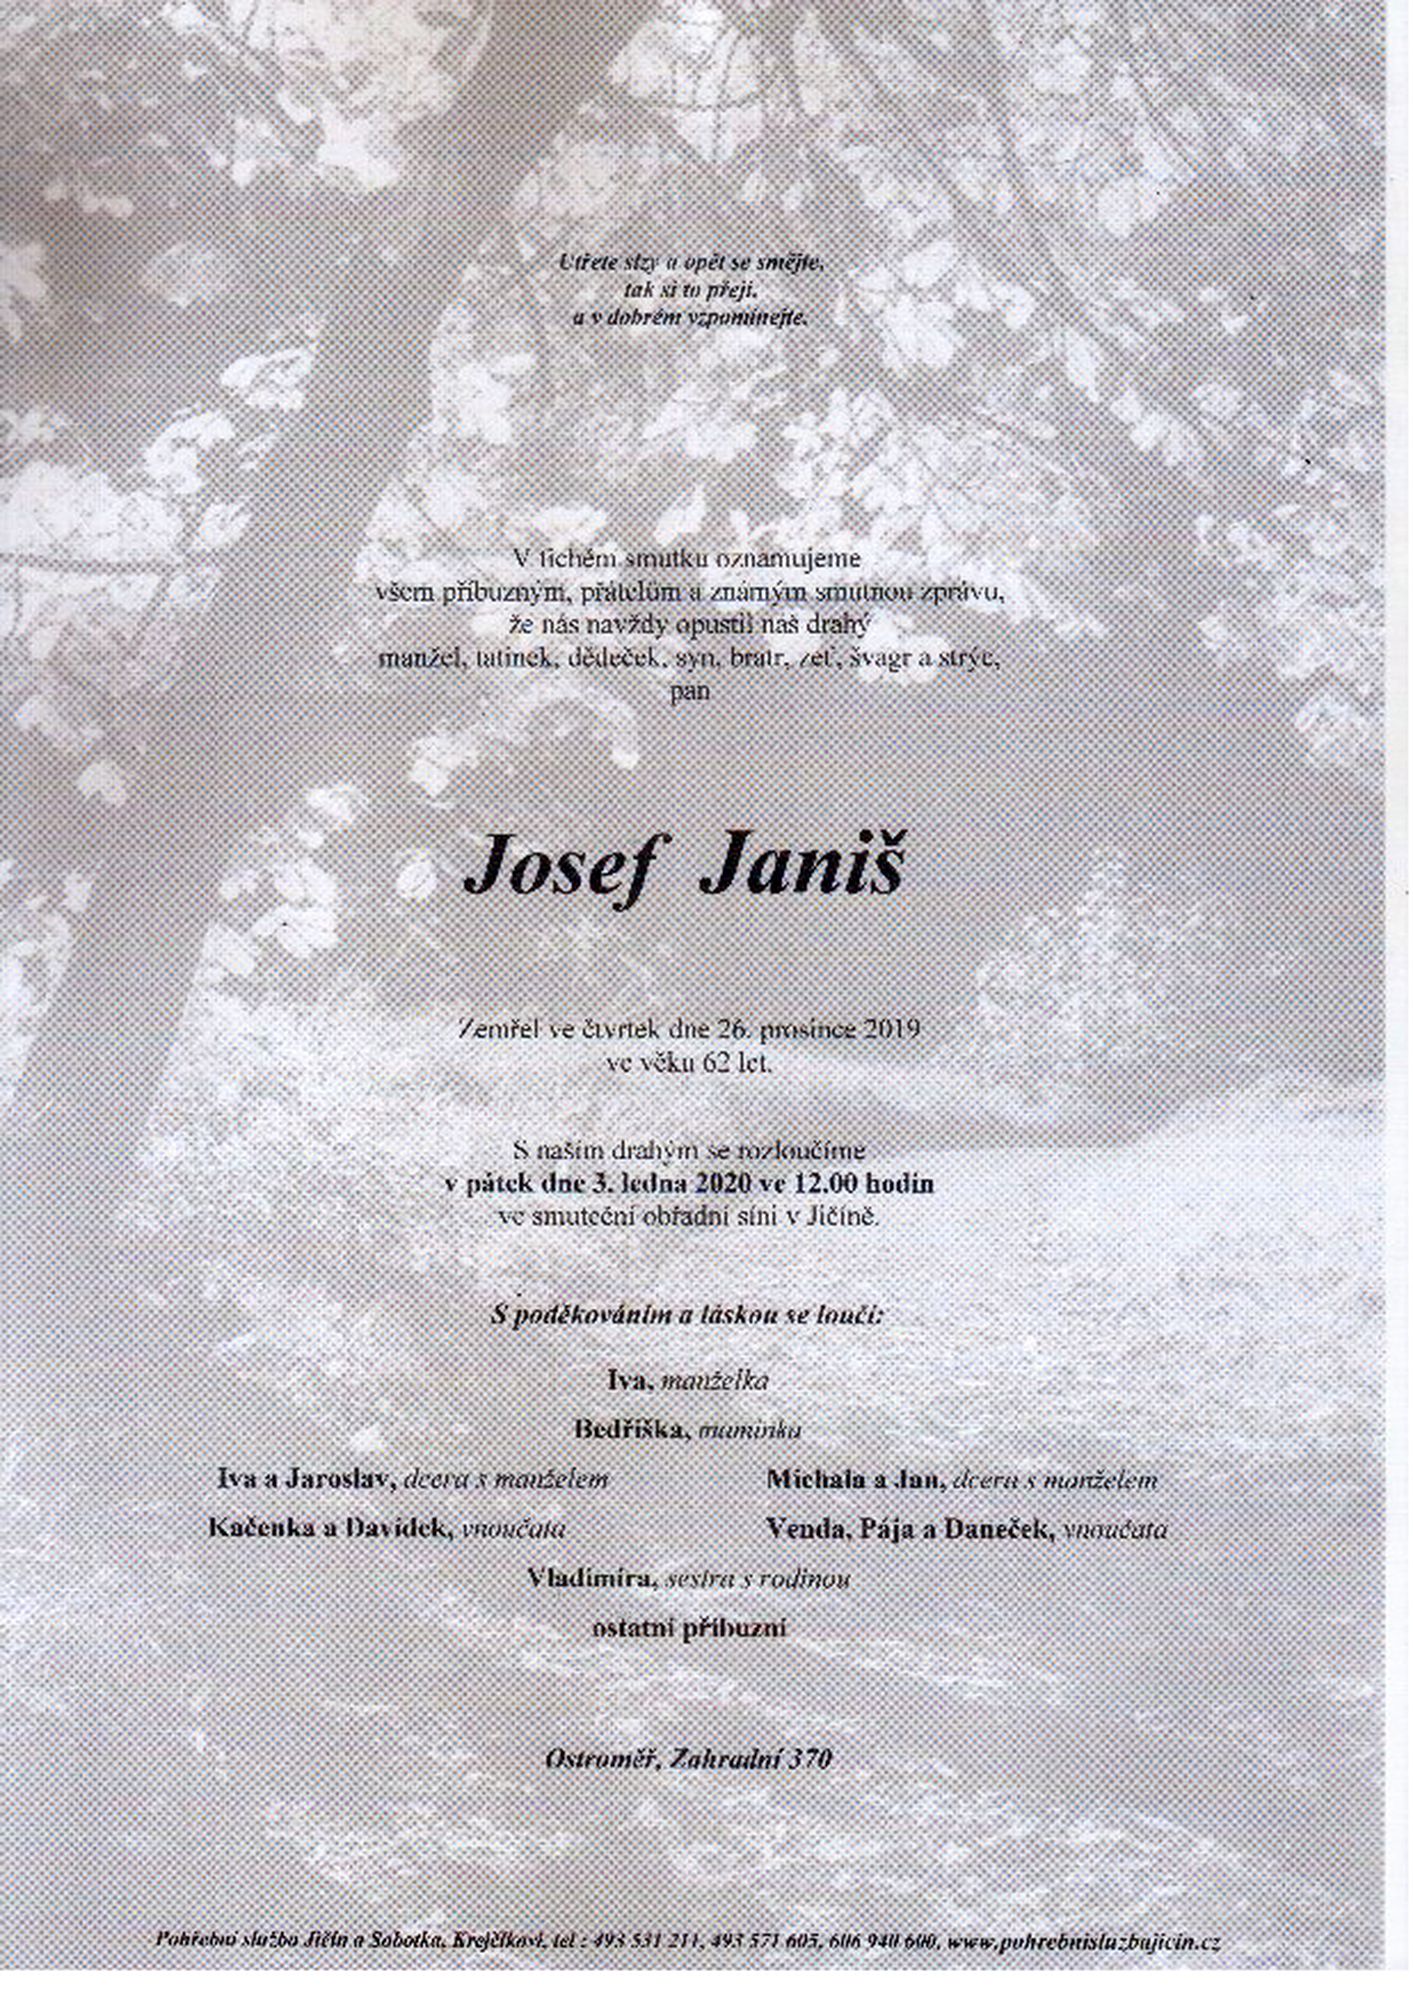 Josef Janiš